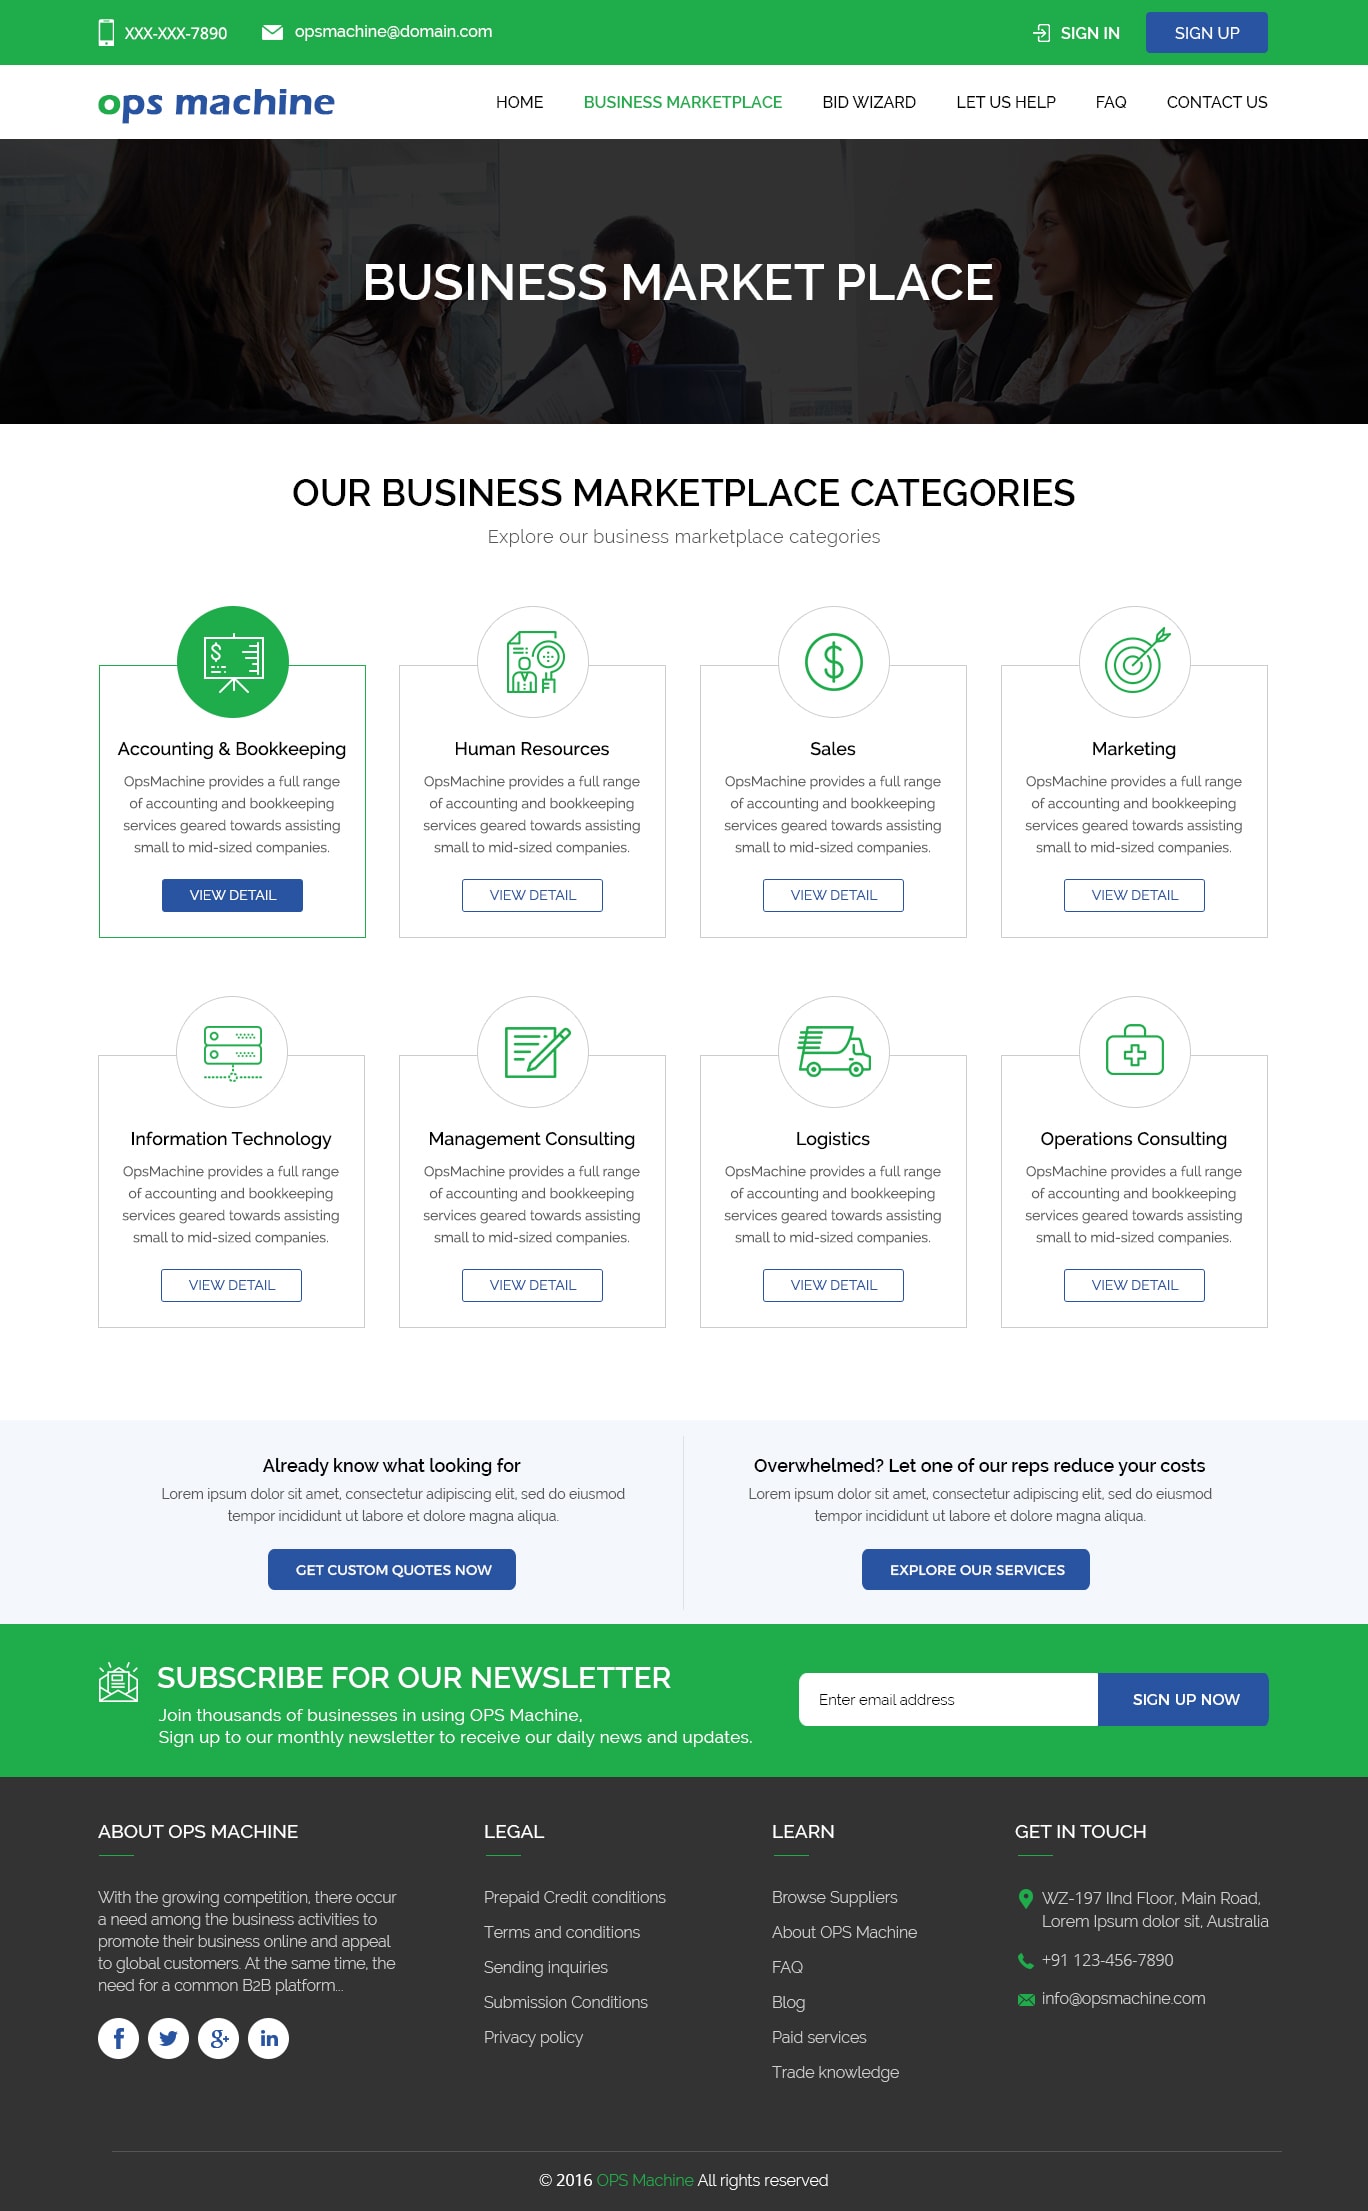 Business Market place page